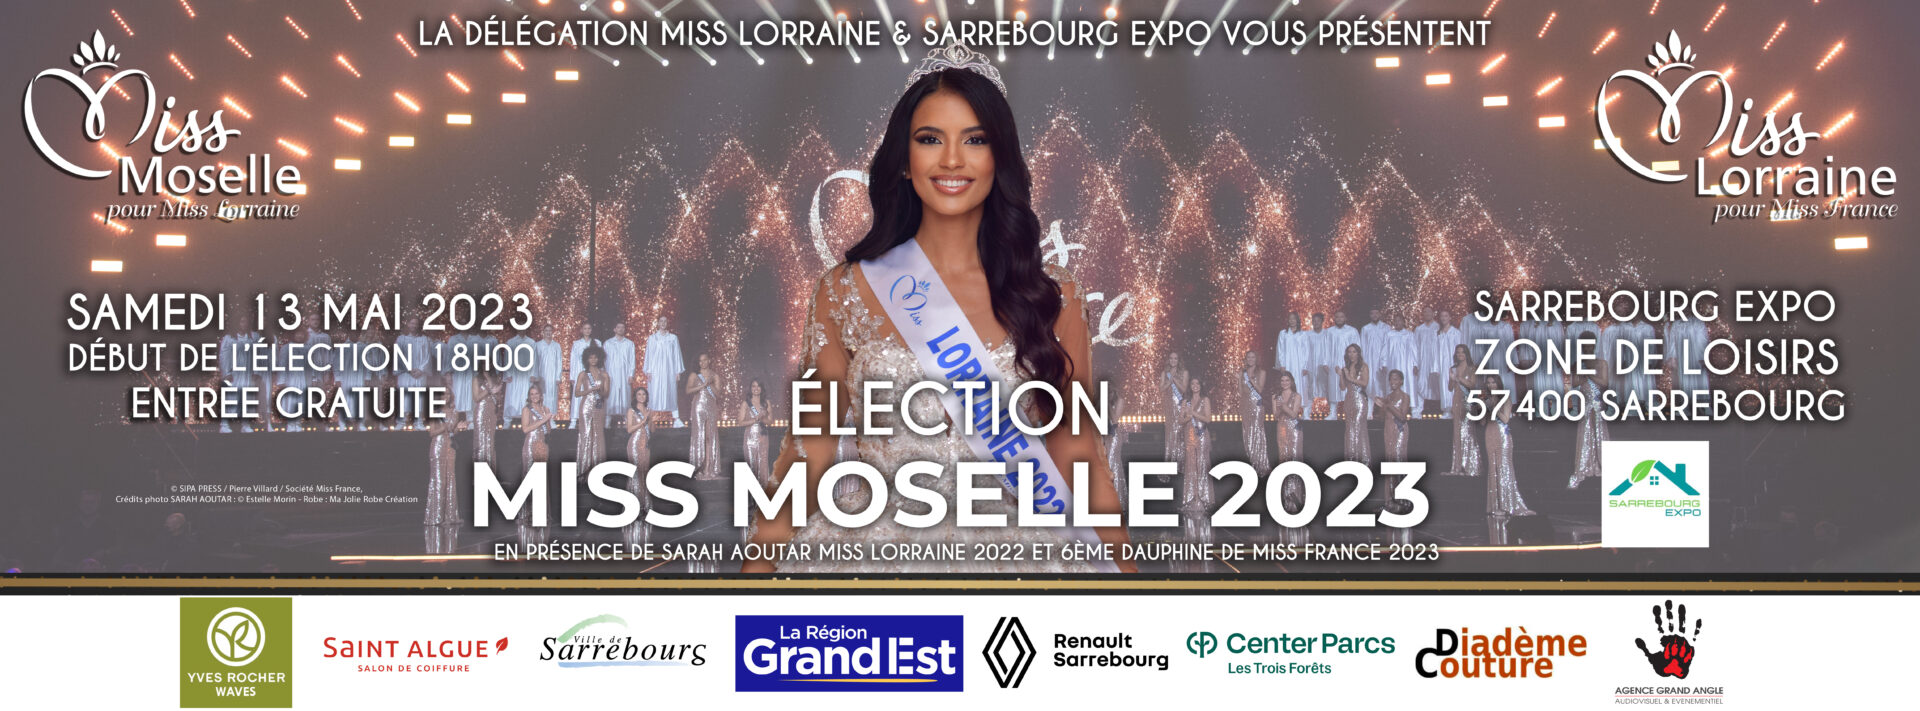 election miss lorraine miss lorraine Couverture Facebook Miss Moselle